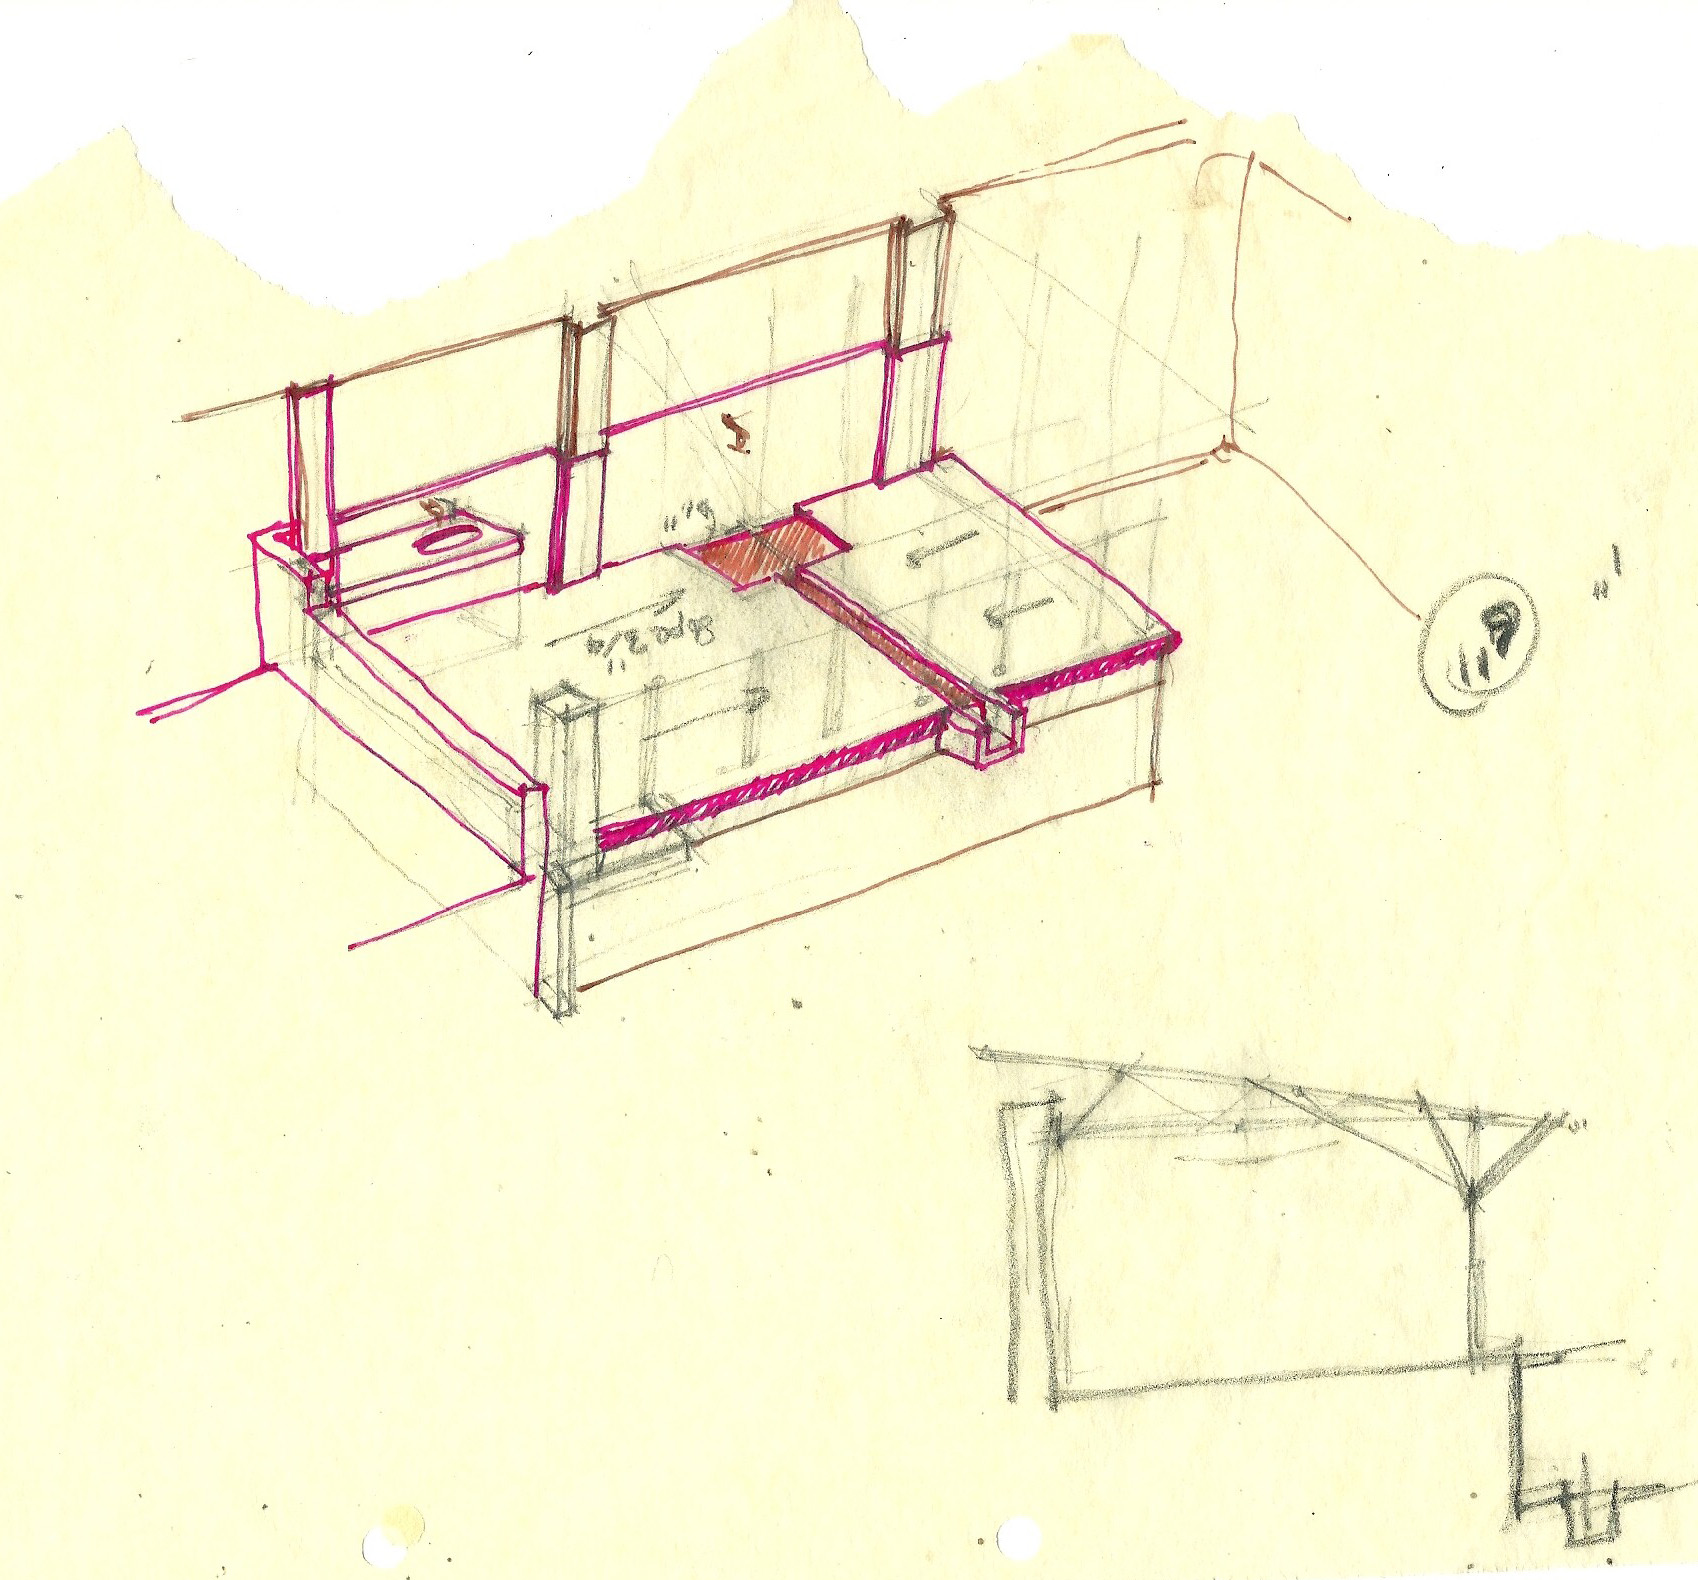 Archioppteryx-architects-puppy-pen-shelter-noida-india-sketch